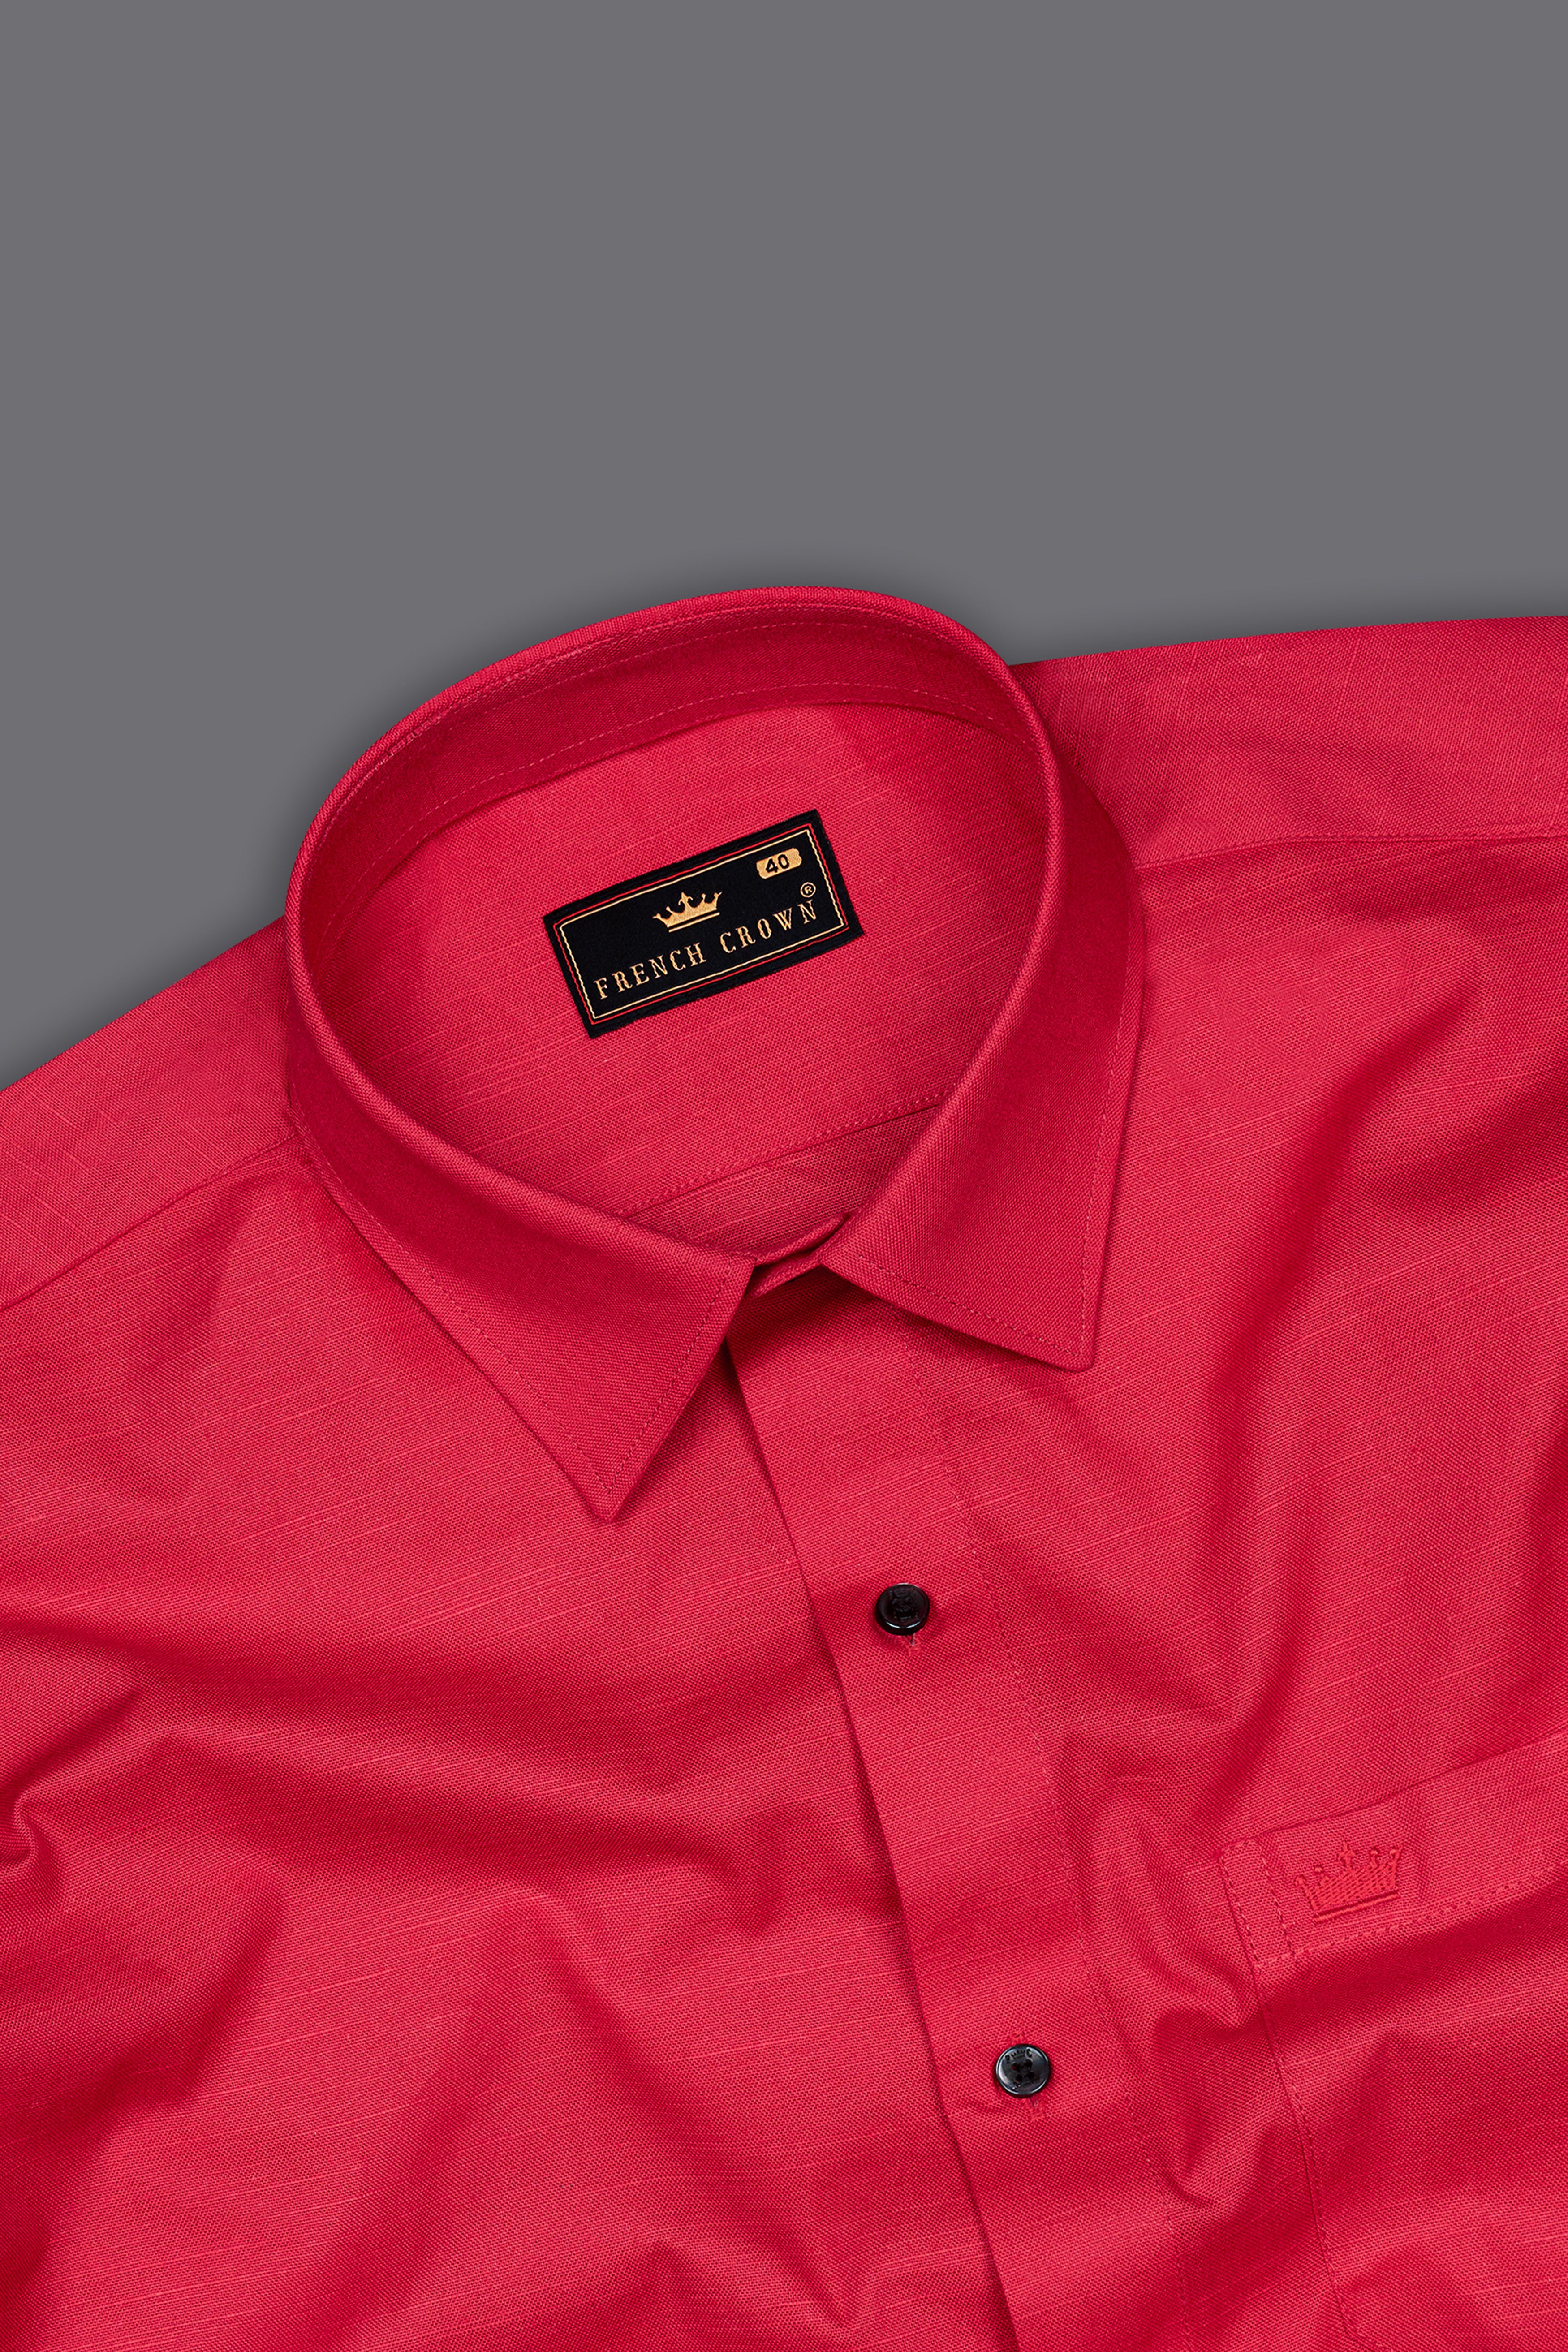 Carmine Red Lord Ram Hand Painted Luxurious Linen Designer Shirt